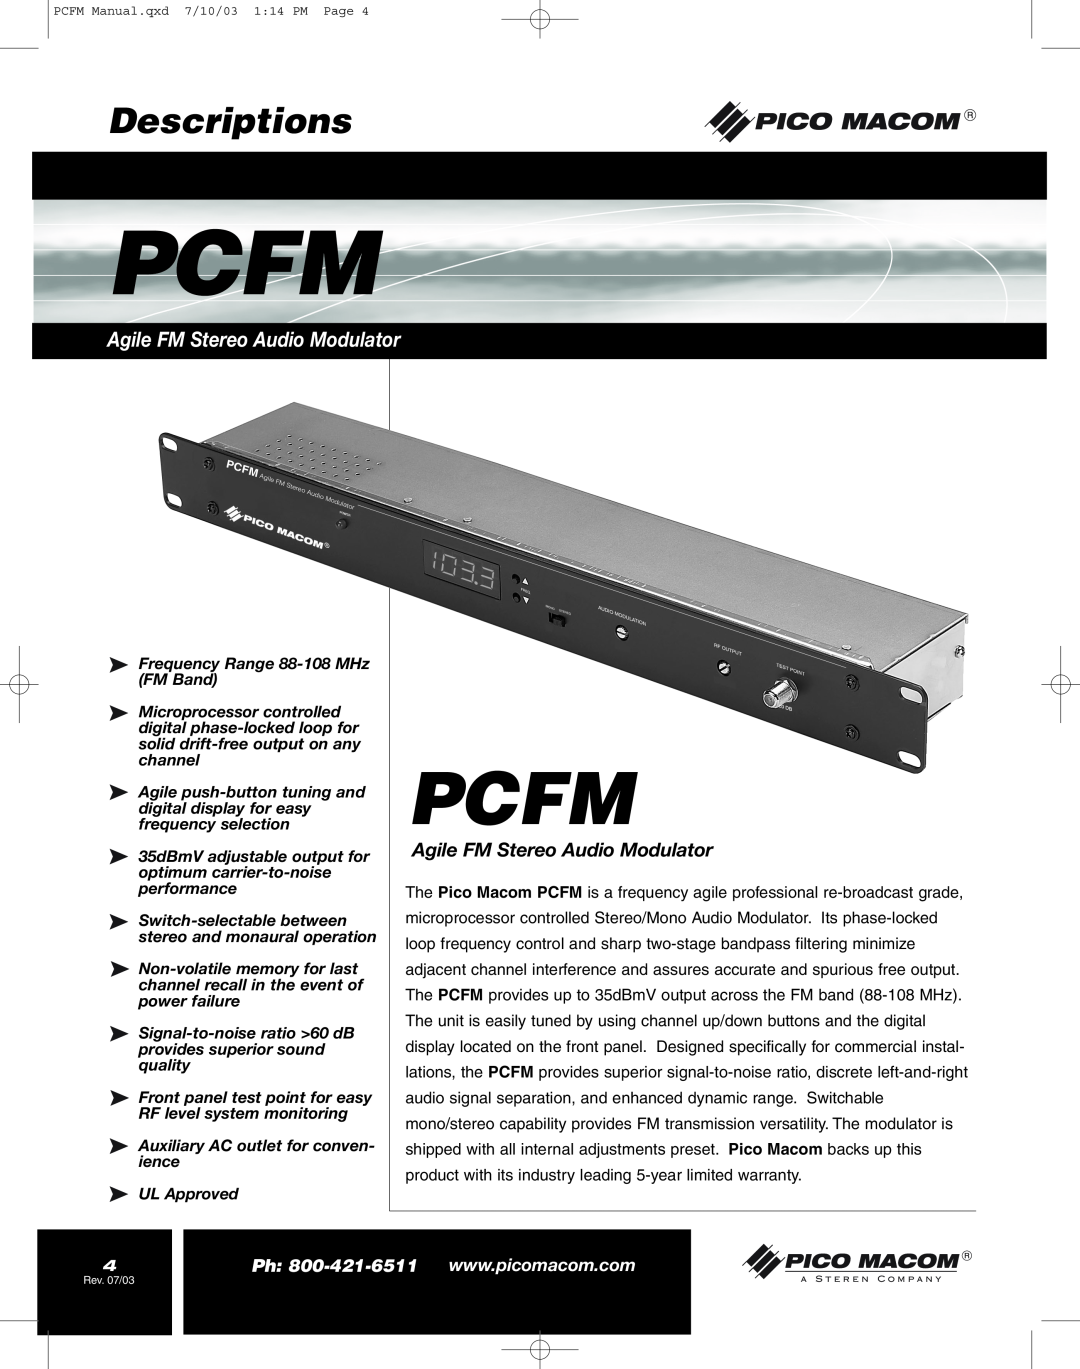 Pico Macom operation manual Descriptions, Agile FM Stereo Audio Modulator, Pcfm 